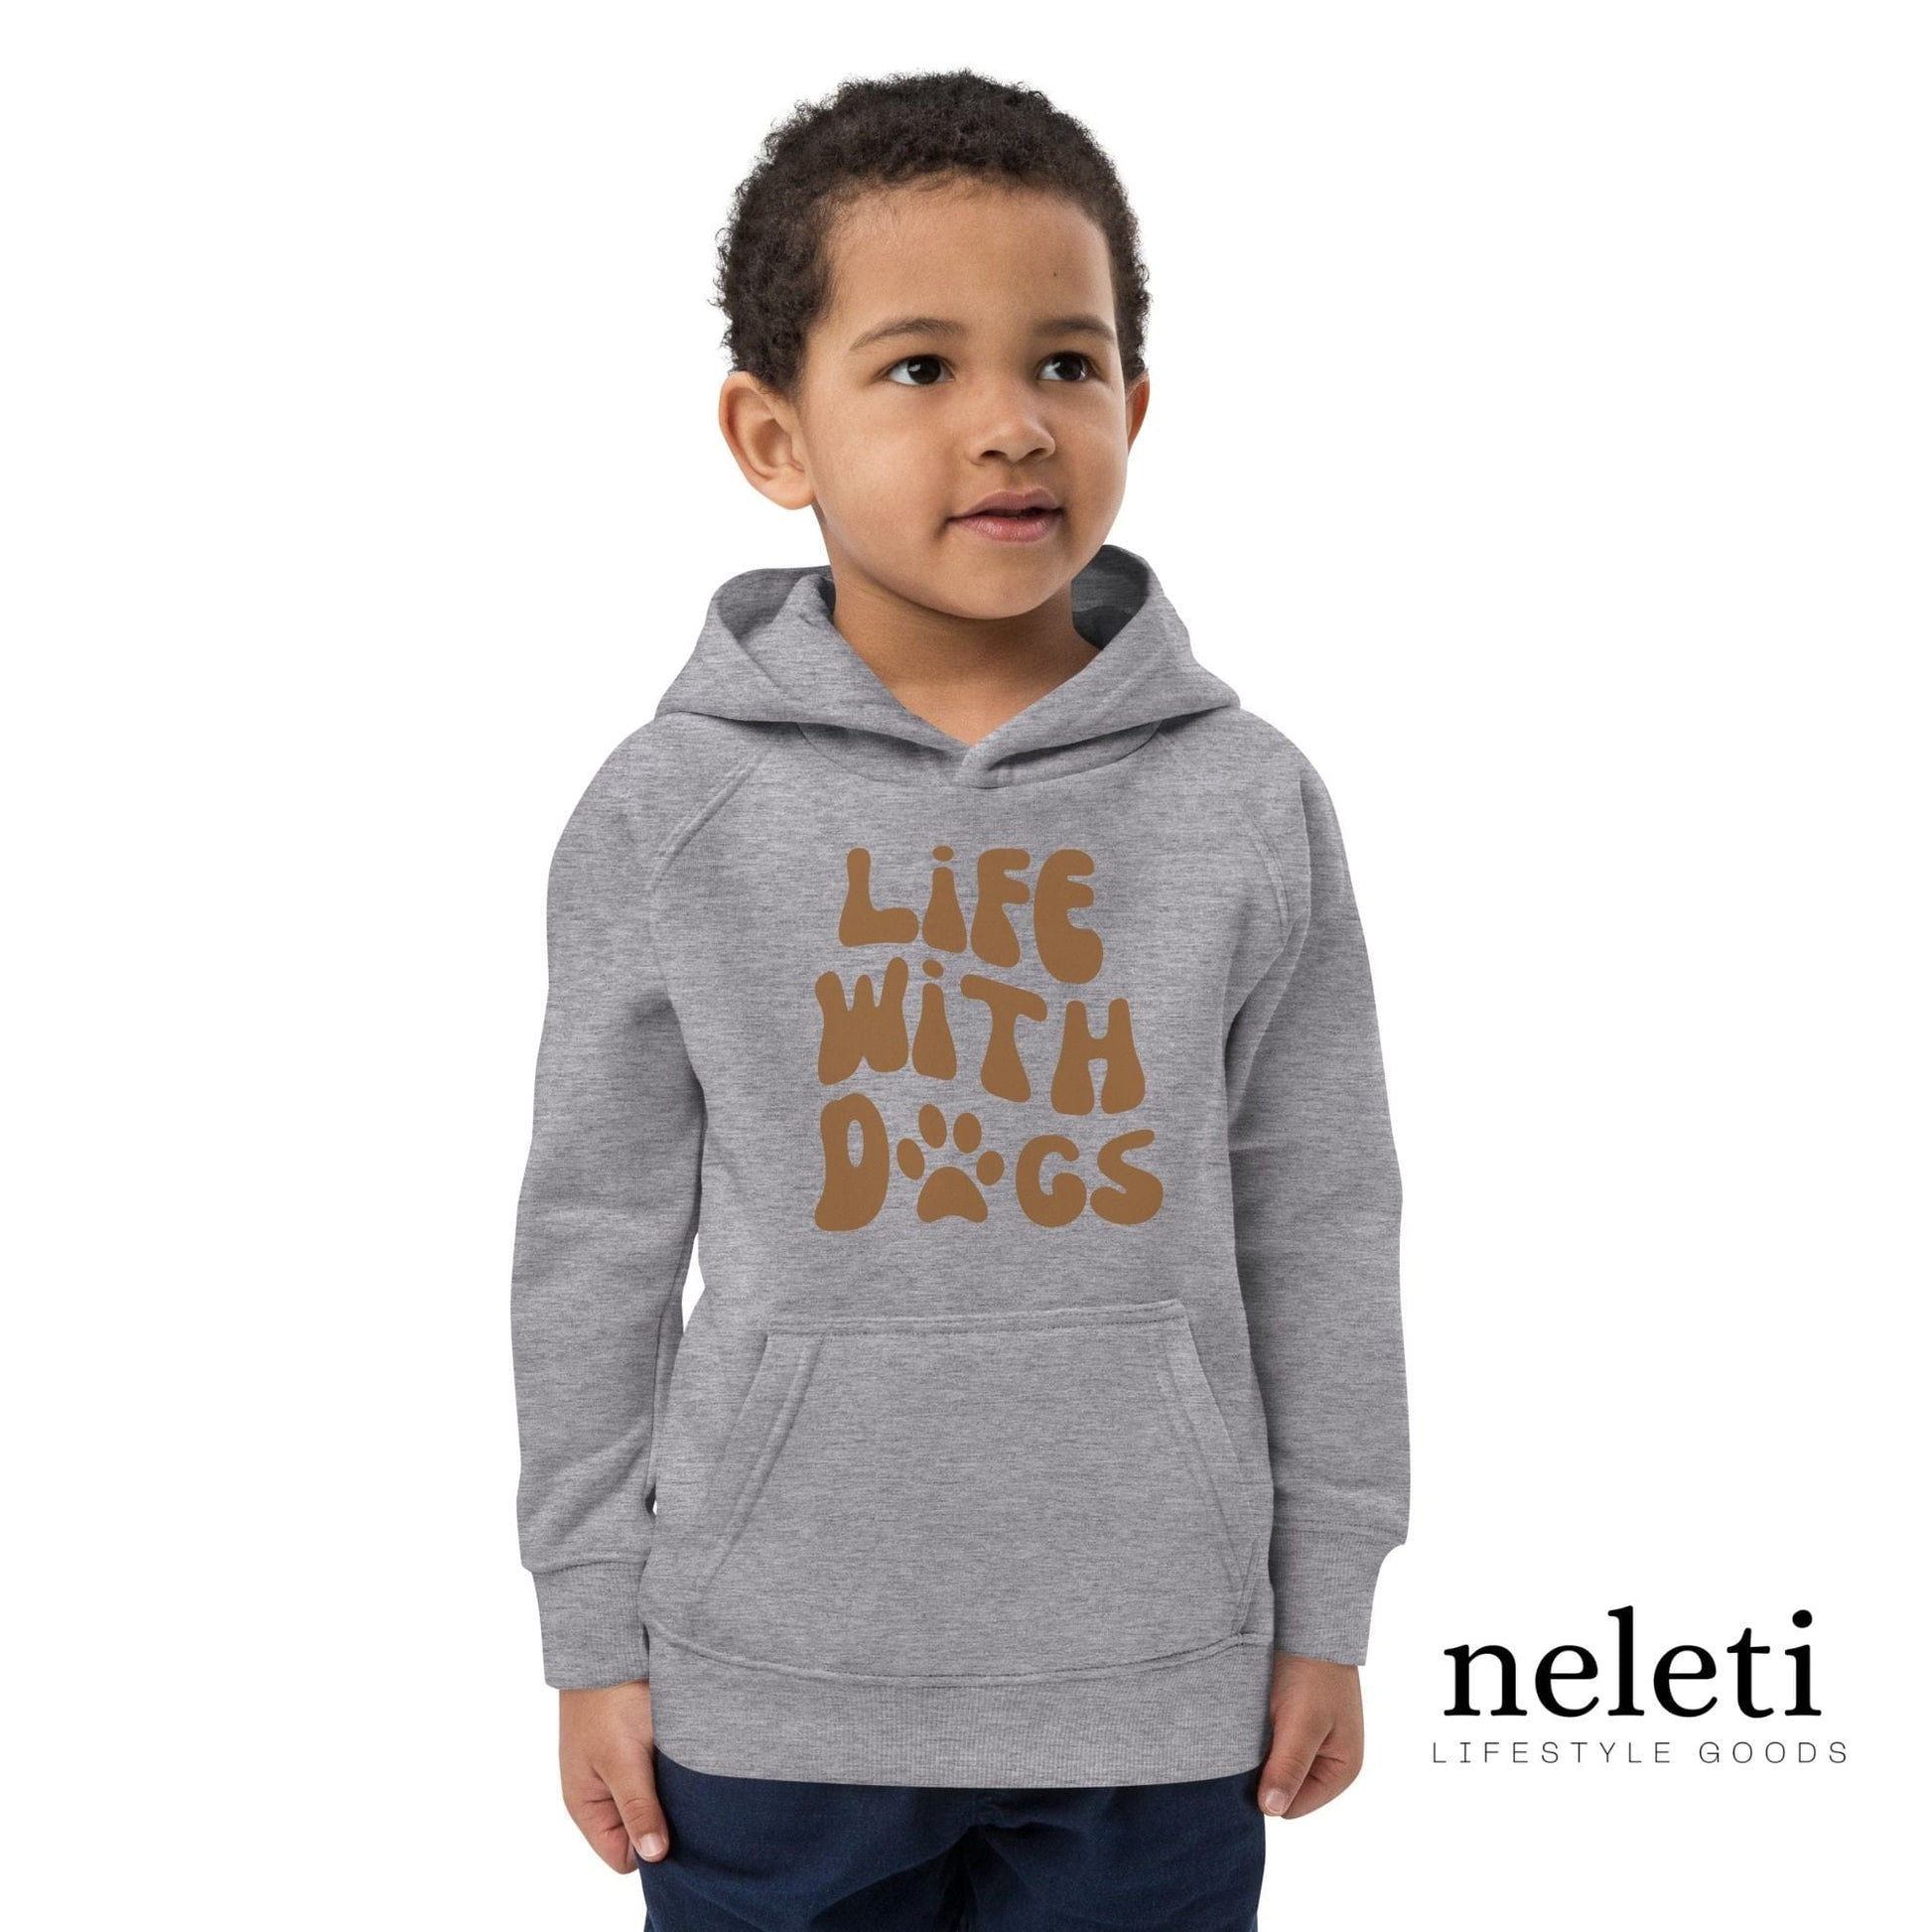 neleti.com-grey-kids-hoodies-with-puff-print_